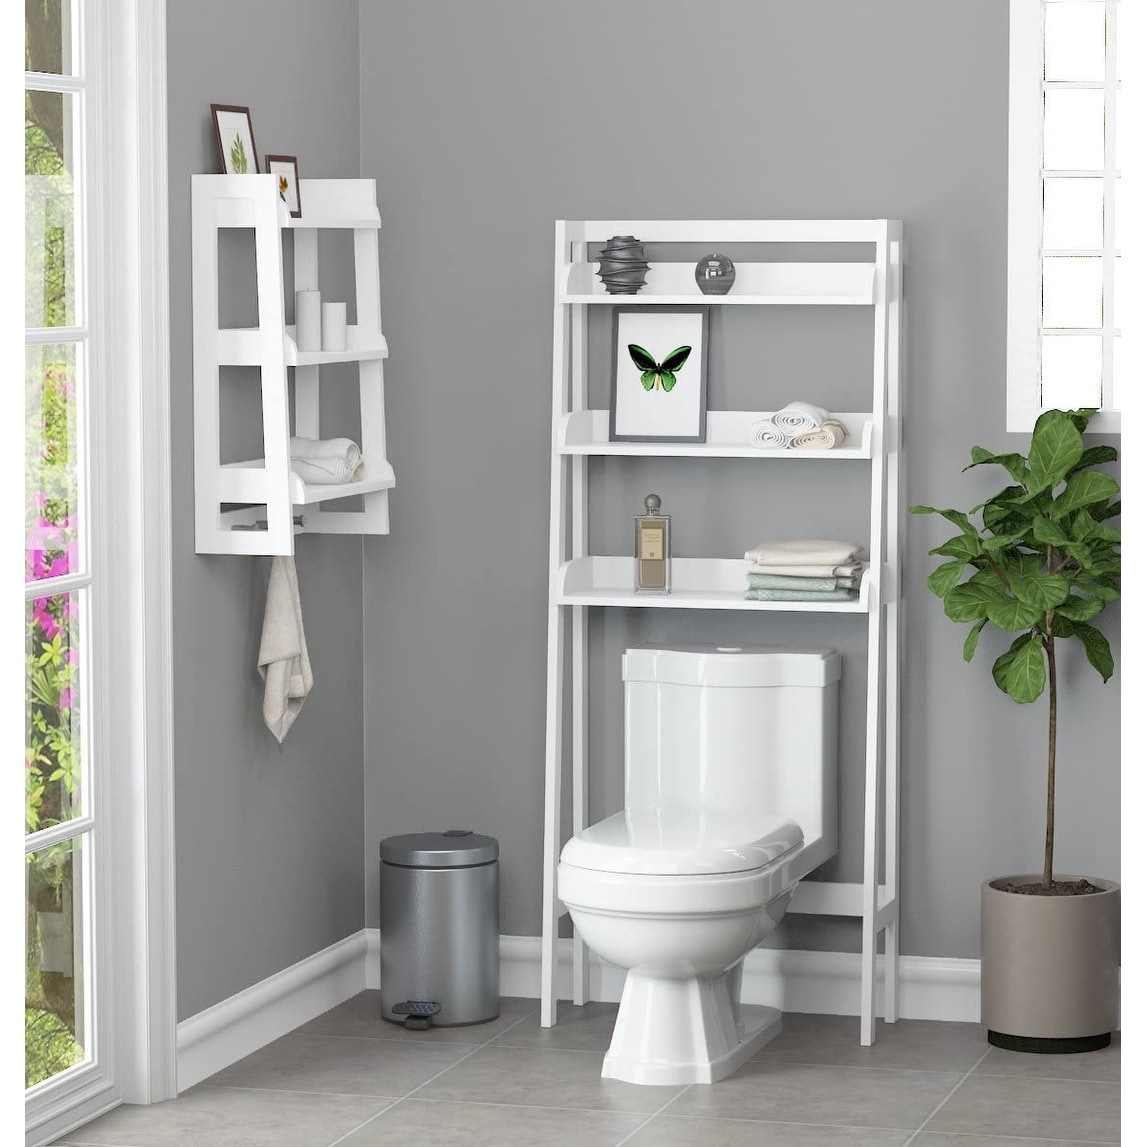 UTEX 3-Shelf Bathroom Organizer Over The Toilet, Bathroom Space saver,  Bathroom Shelf, Espresso